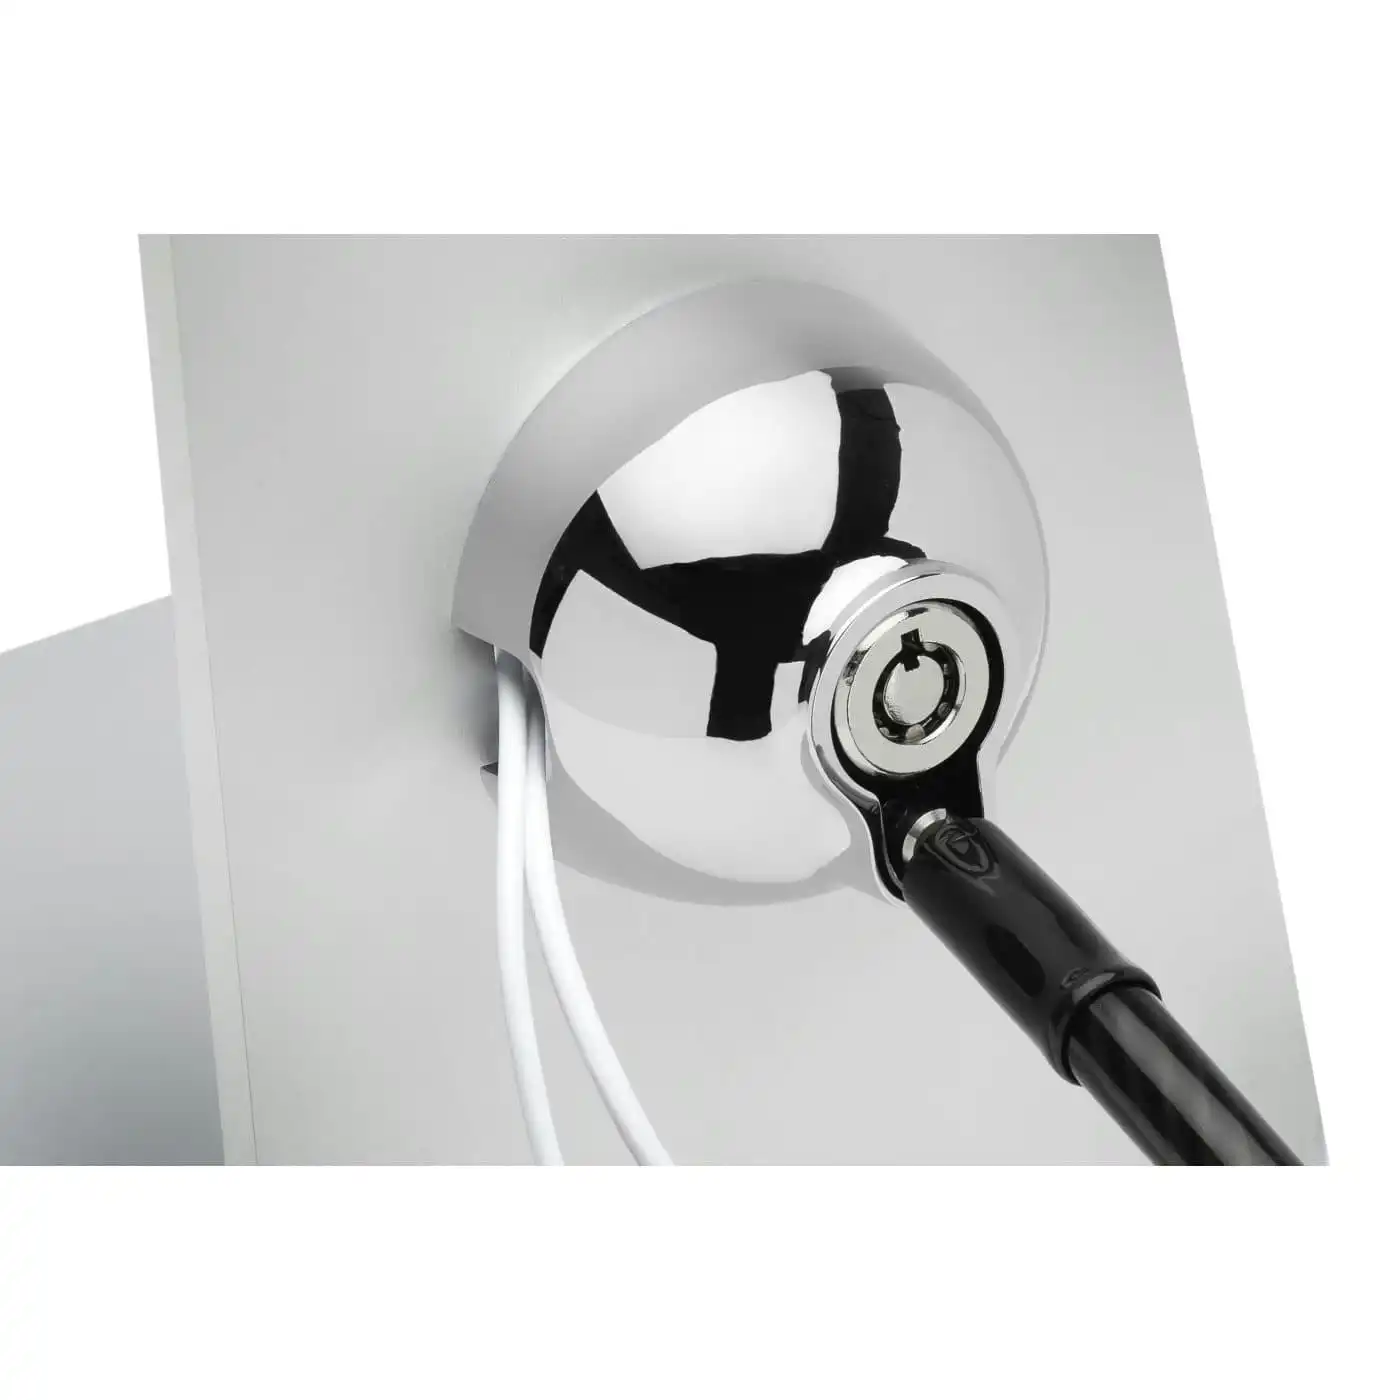 Kensington SafeDome Secure ClickSafe Keyed Lock for iMac Computer K64962USA